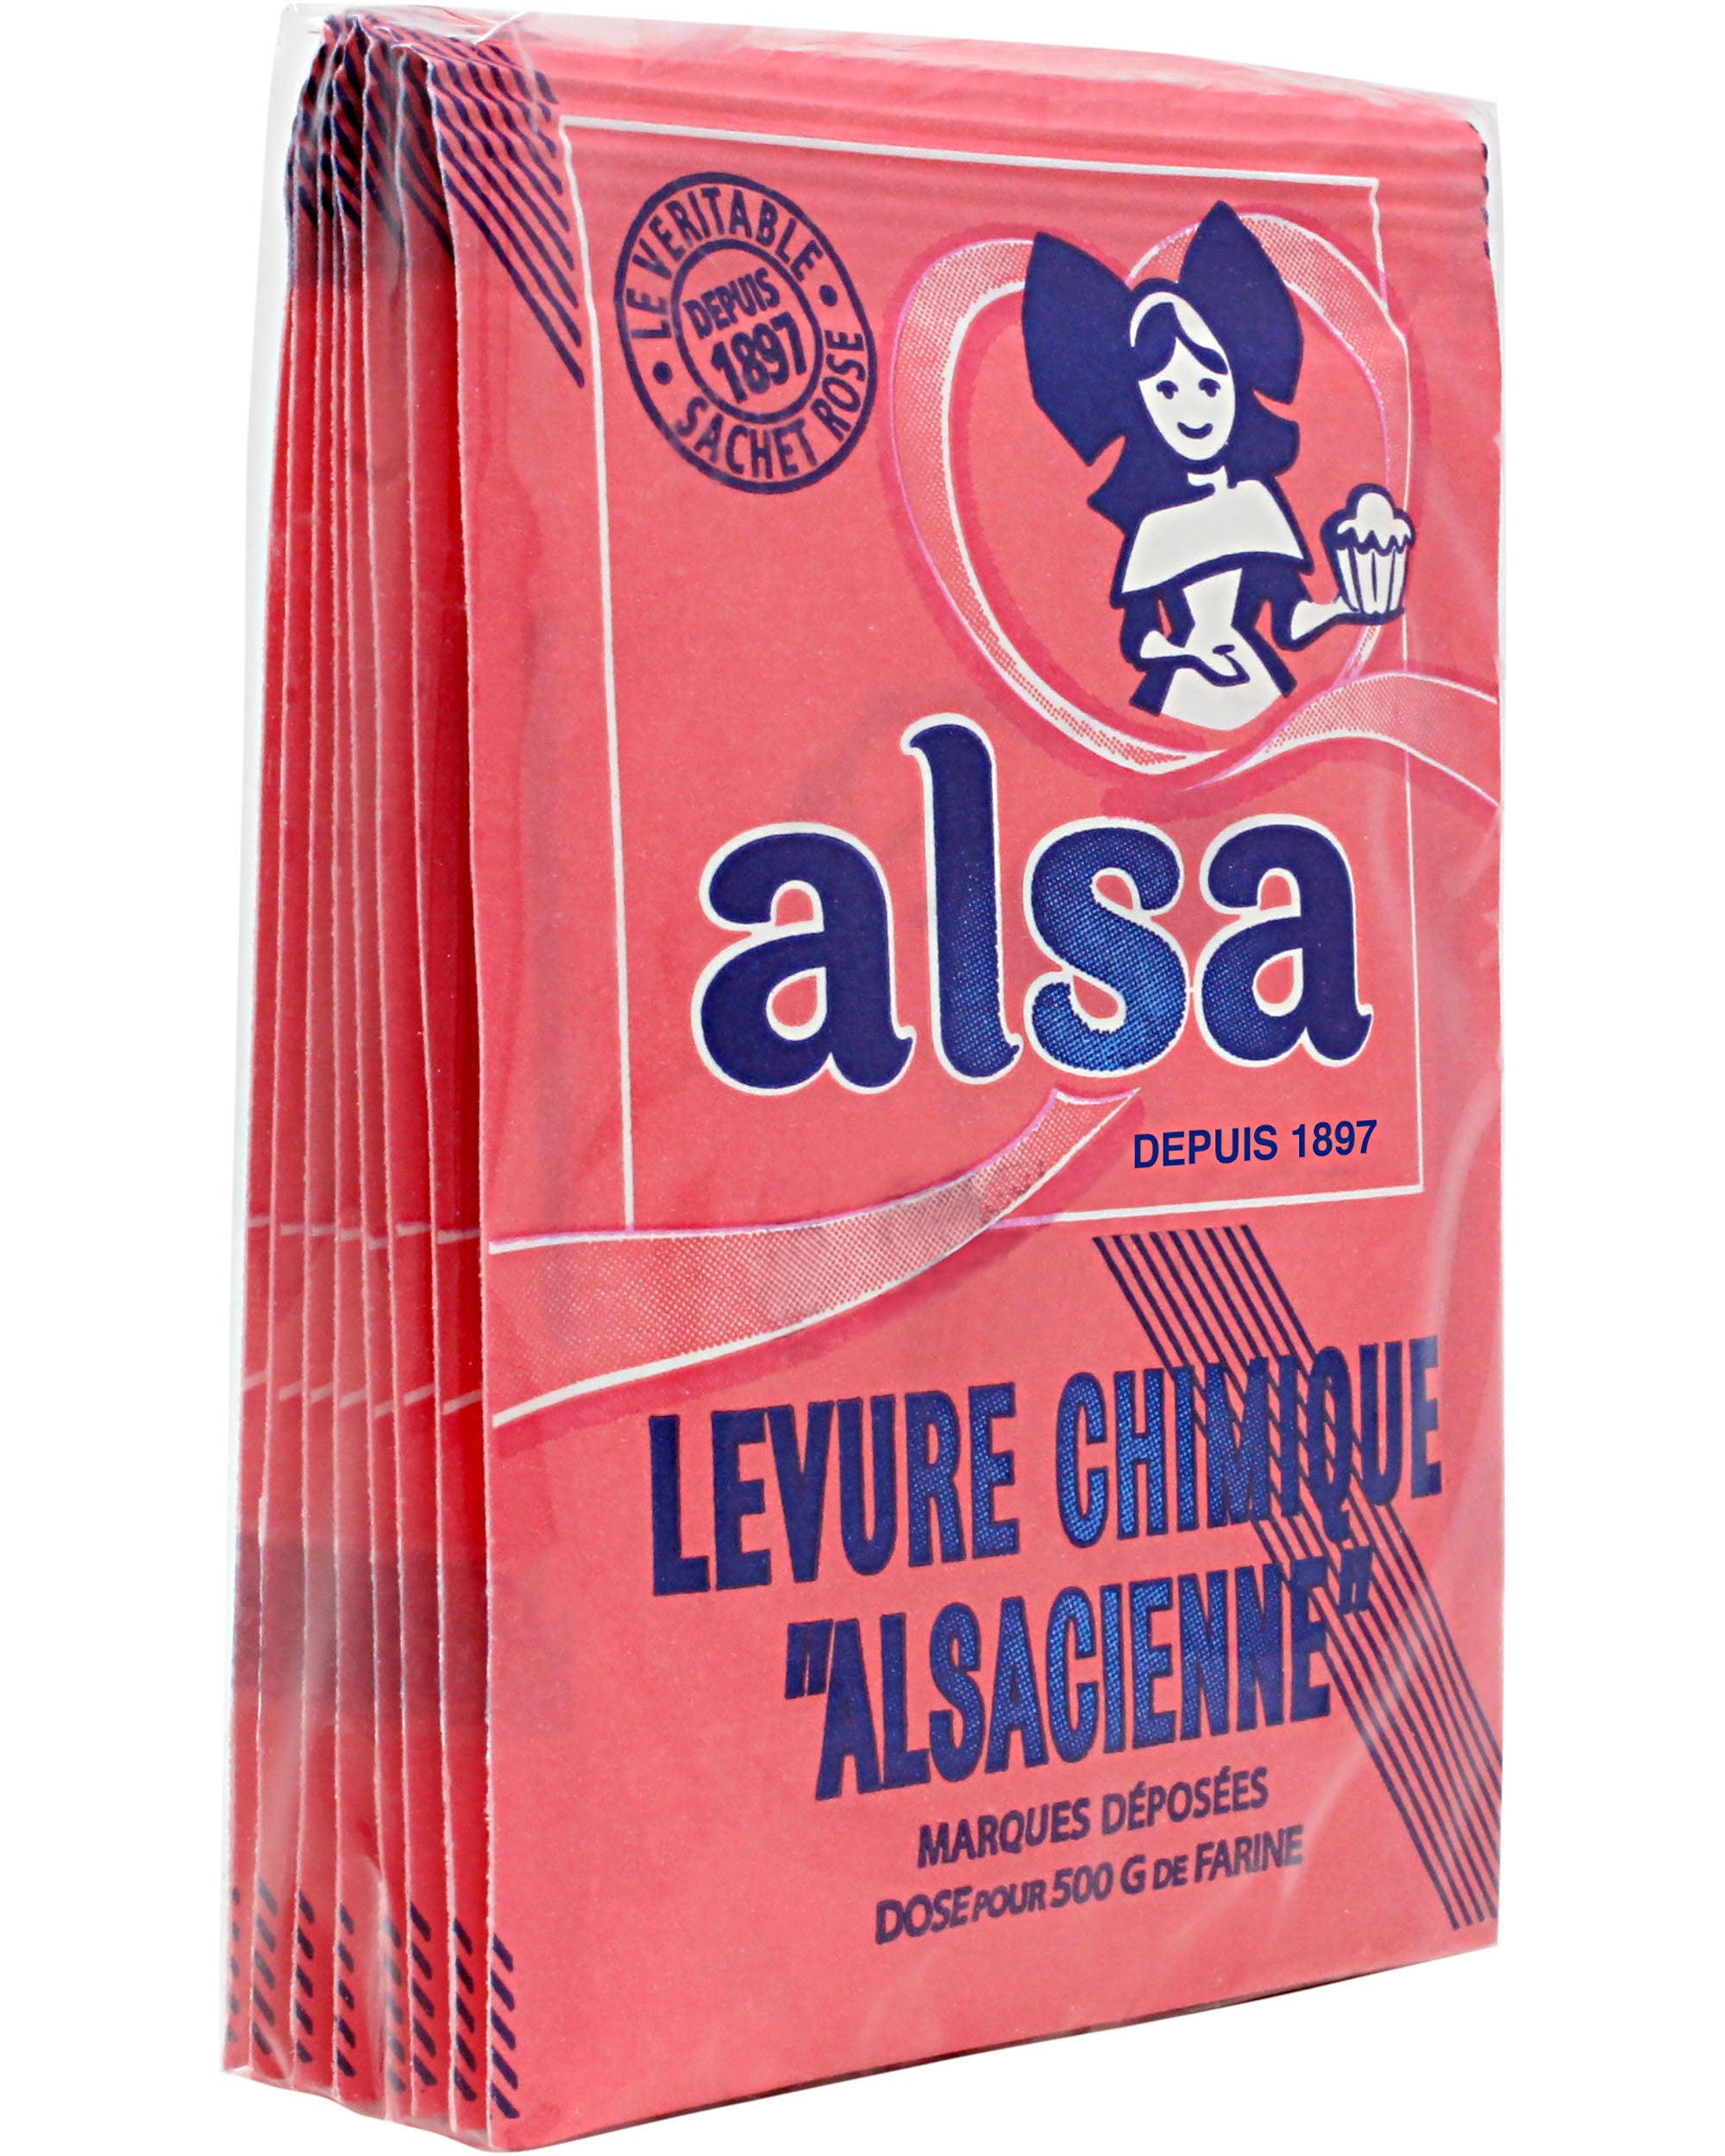 Alsa Baking Powder (Levure Chimique Alsacienne) - 3.1 oz / 88 g